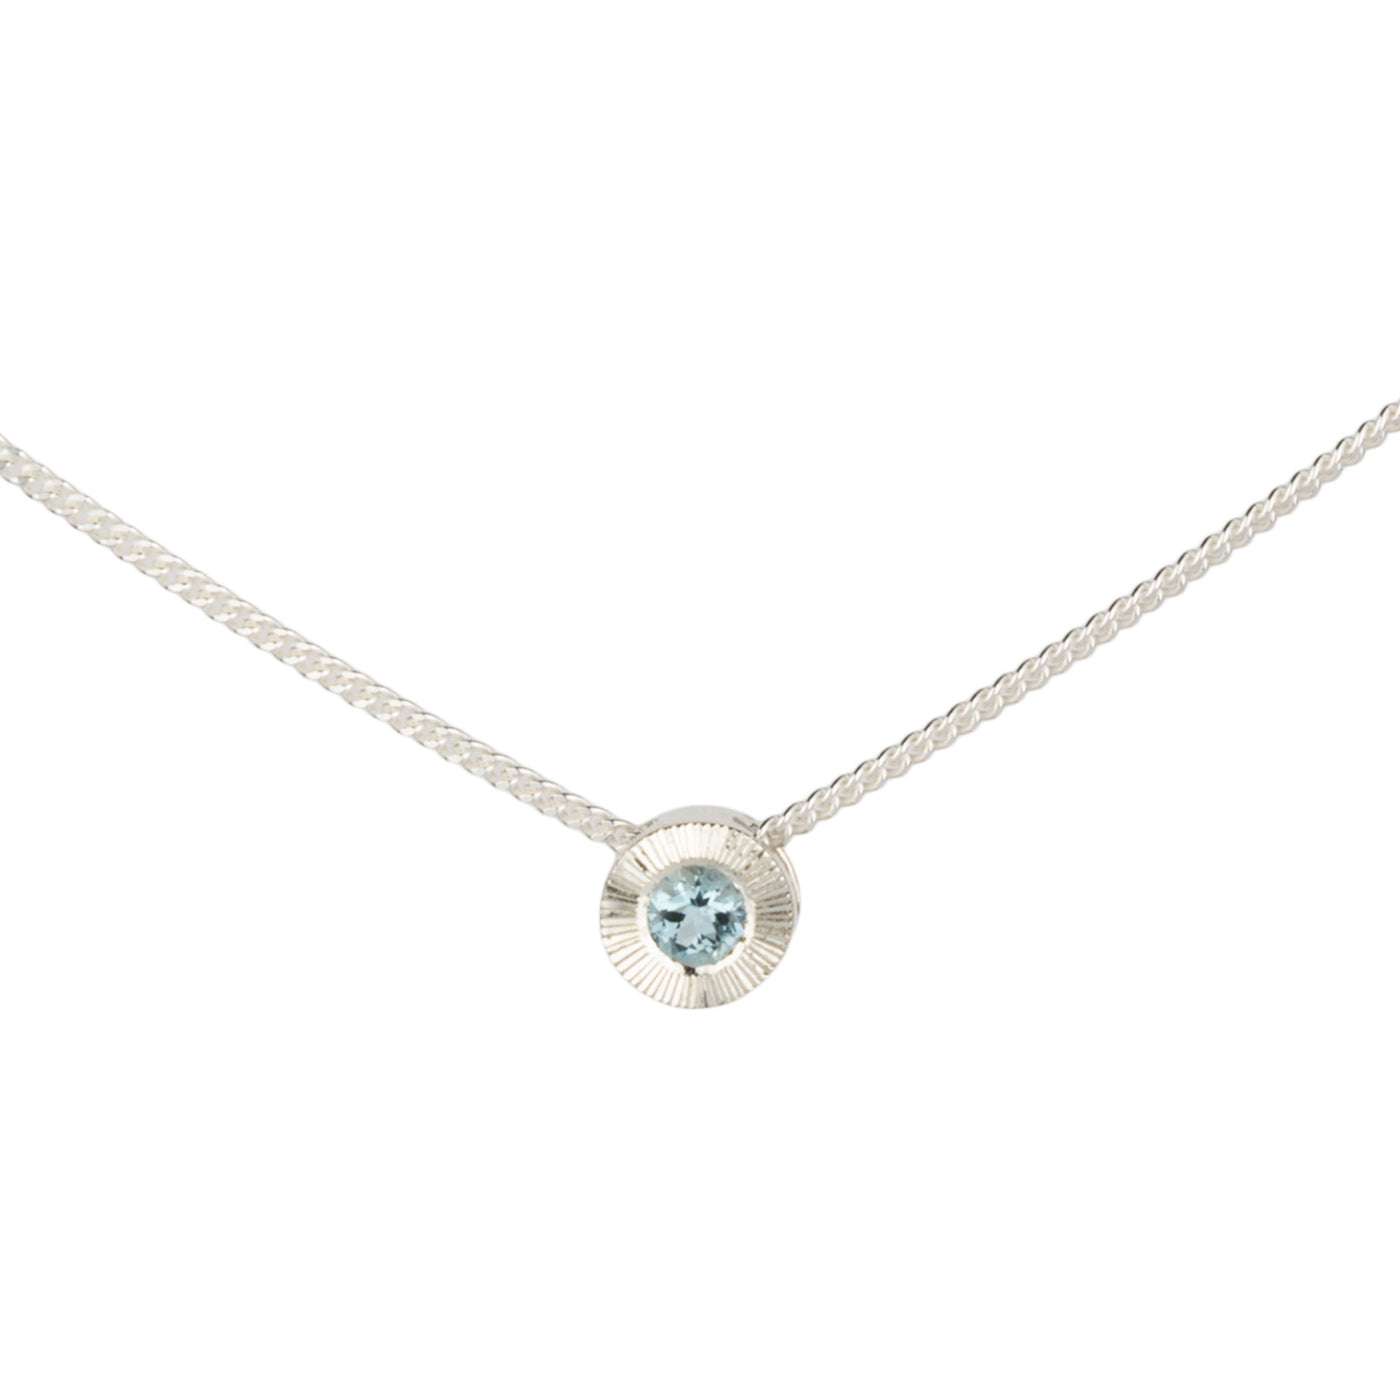 March birthstone Aurora slide necklace with aquamarine in silver